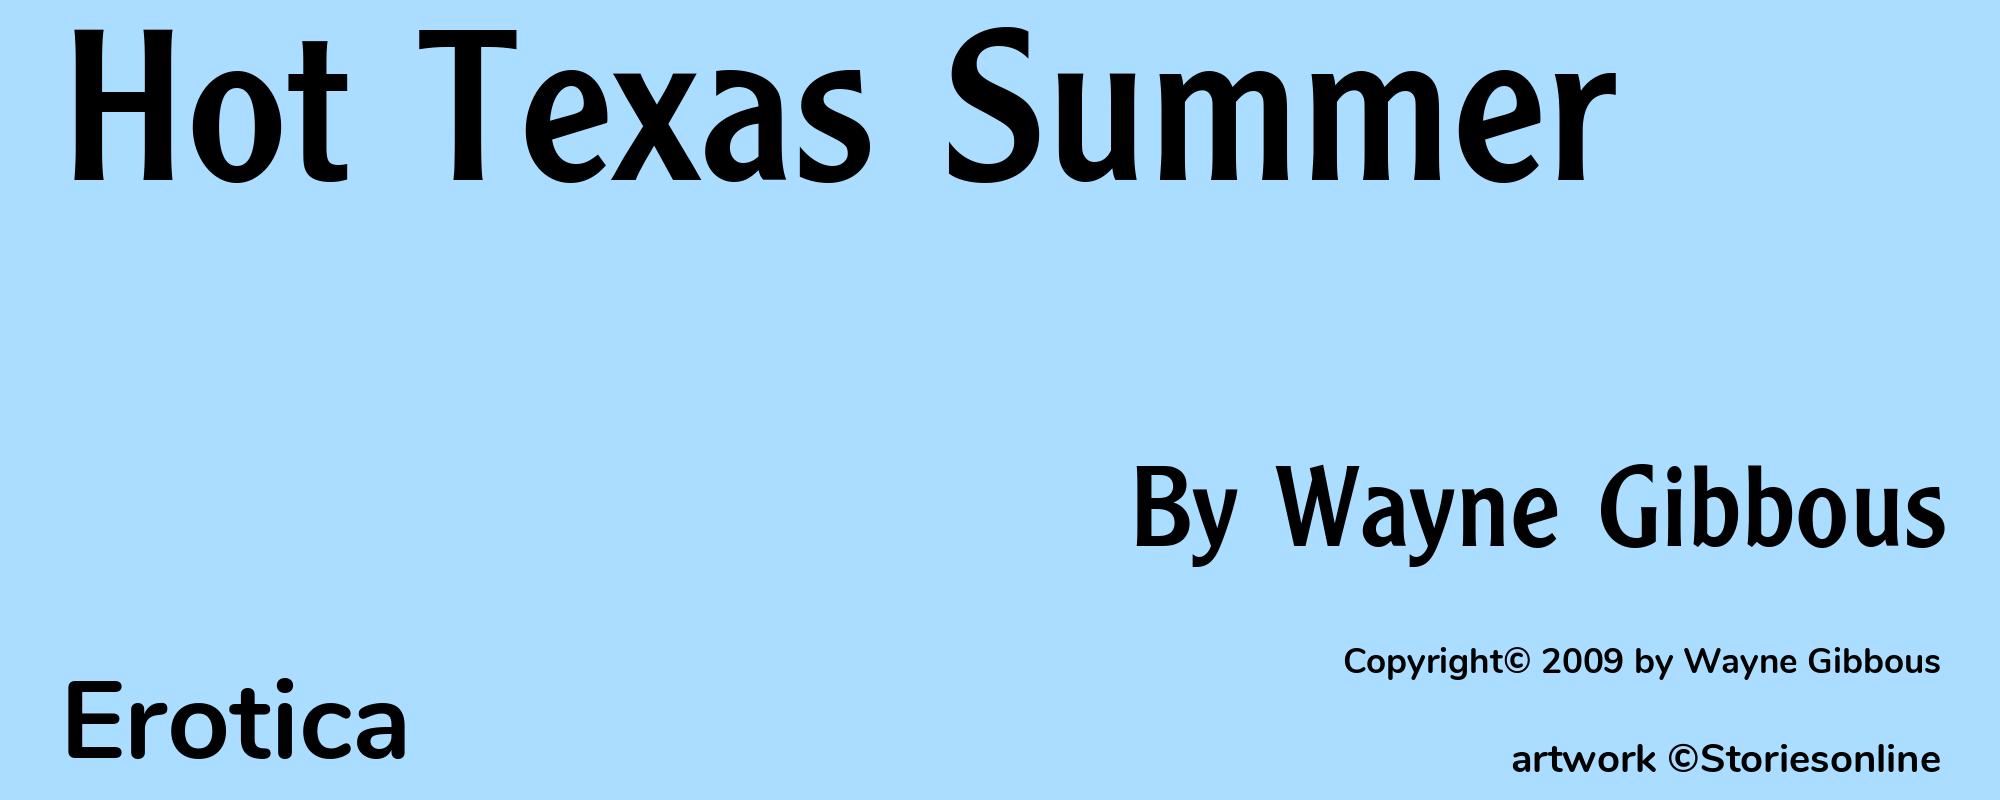 Hot Texas Summer - Cover